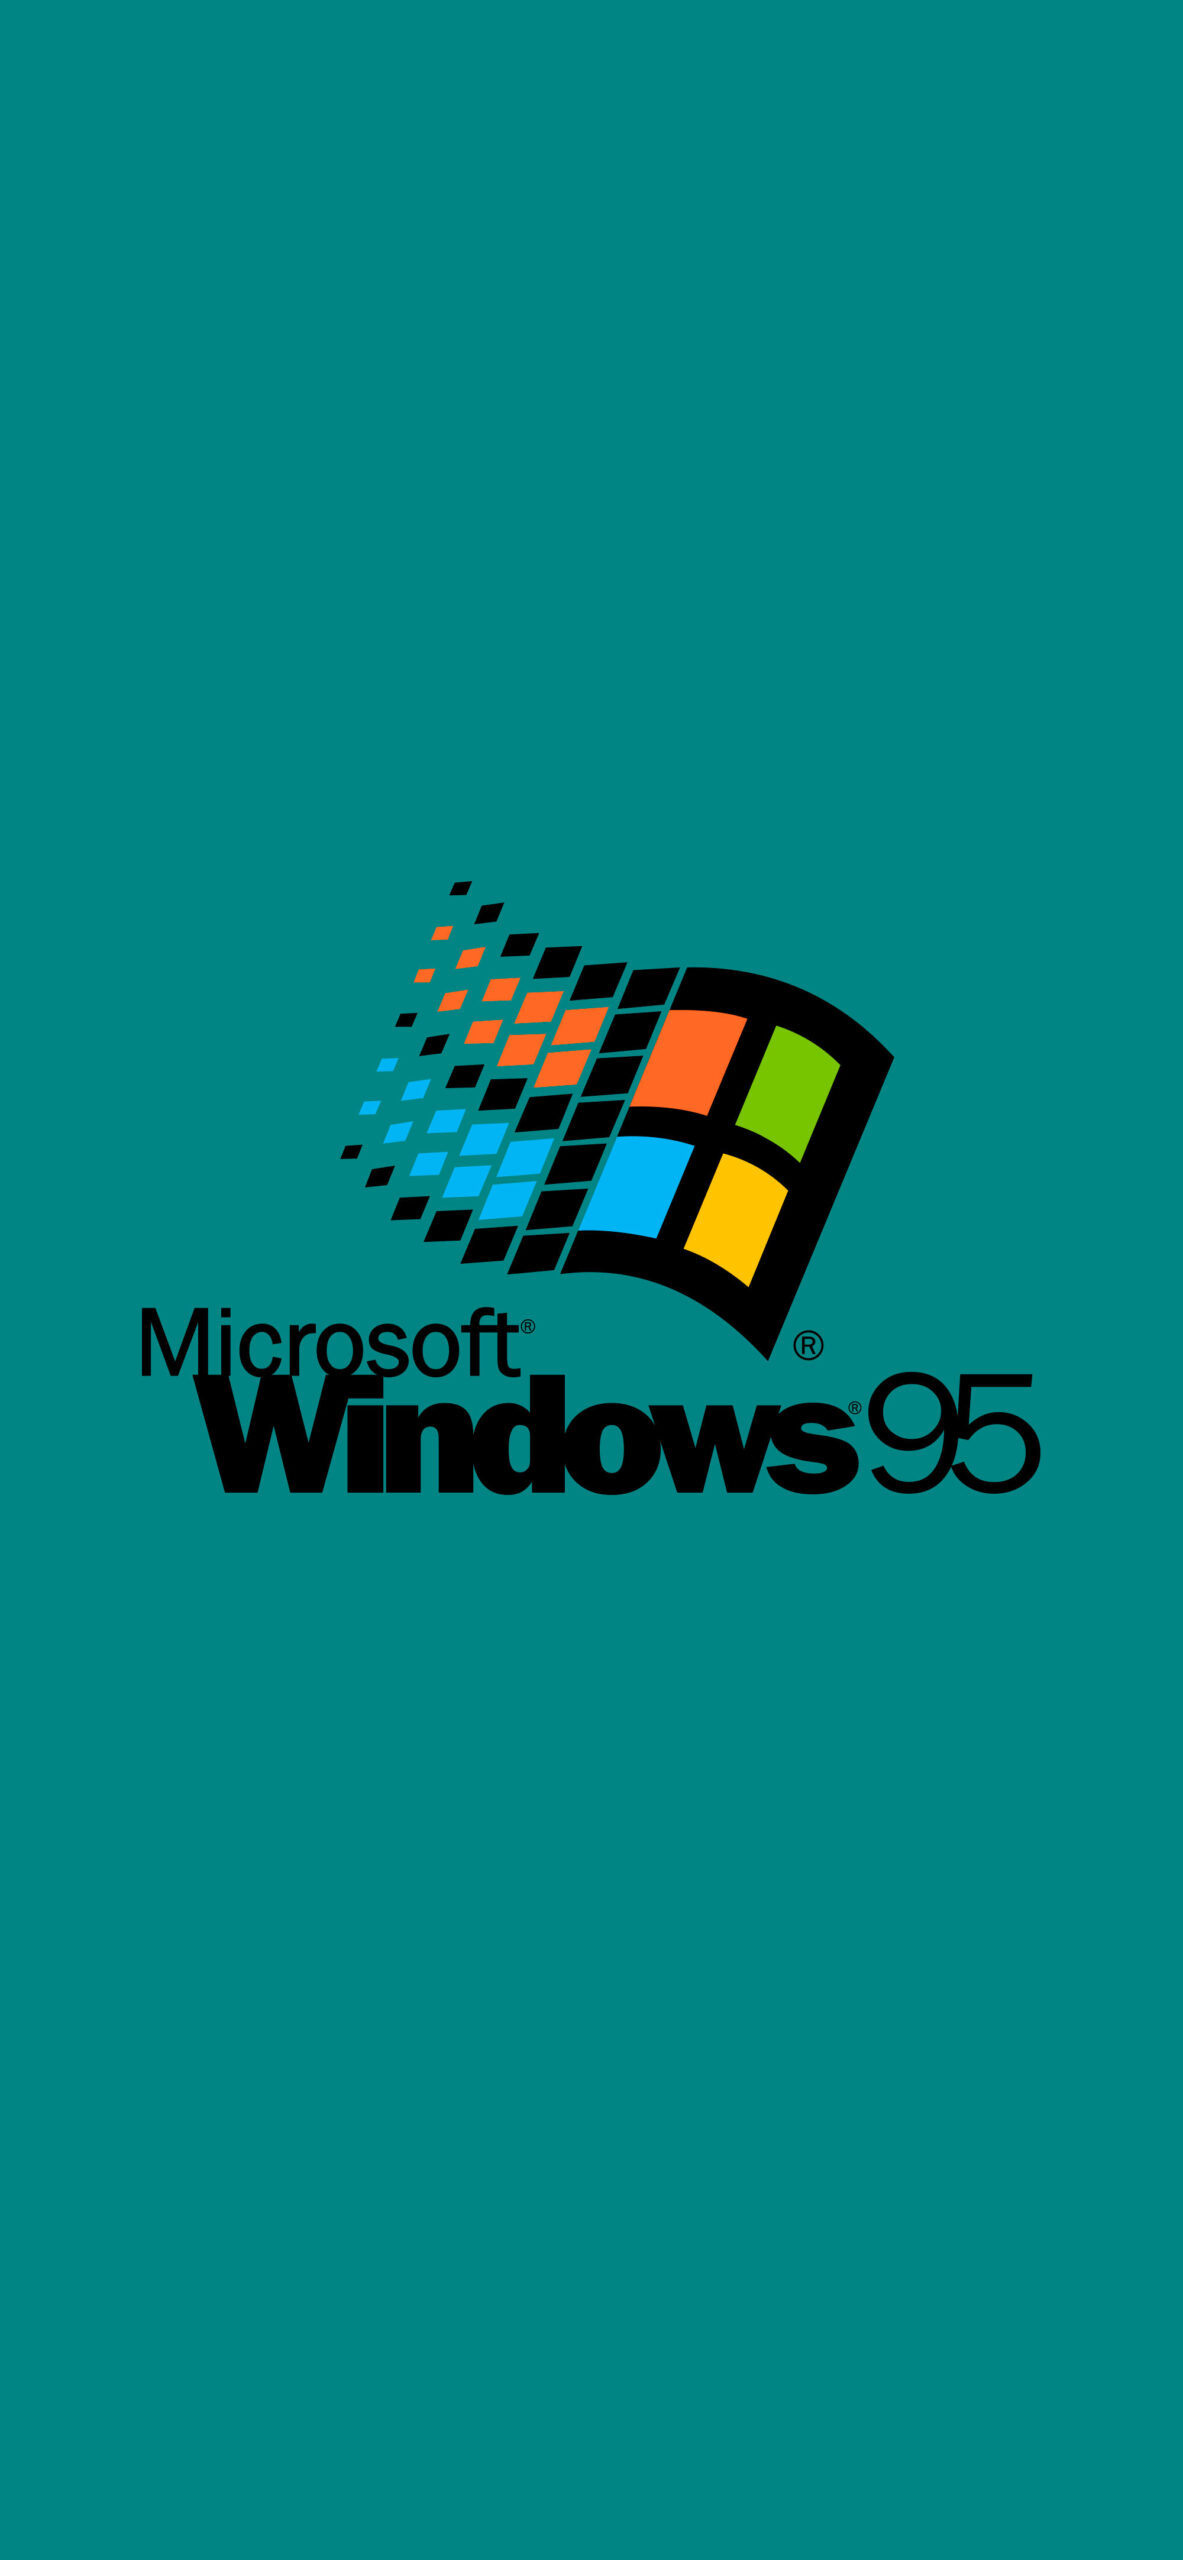 Windows 95 Wallpaper Win 95 Green Wallpaper for iPhone Free